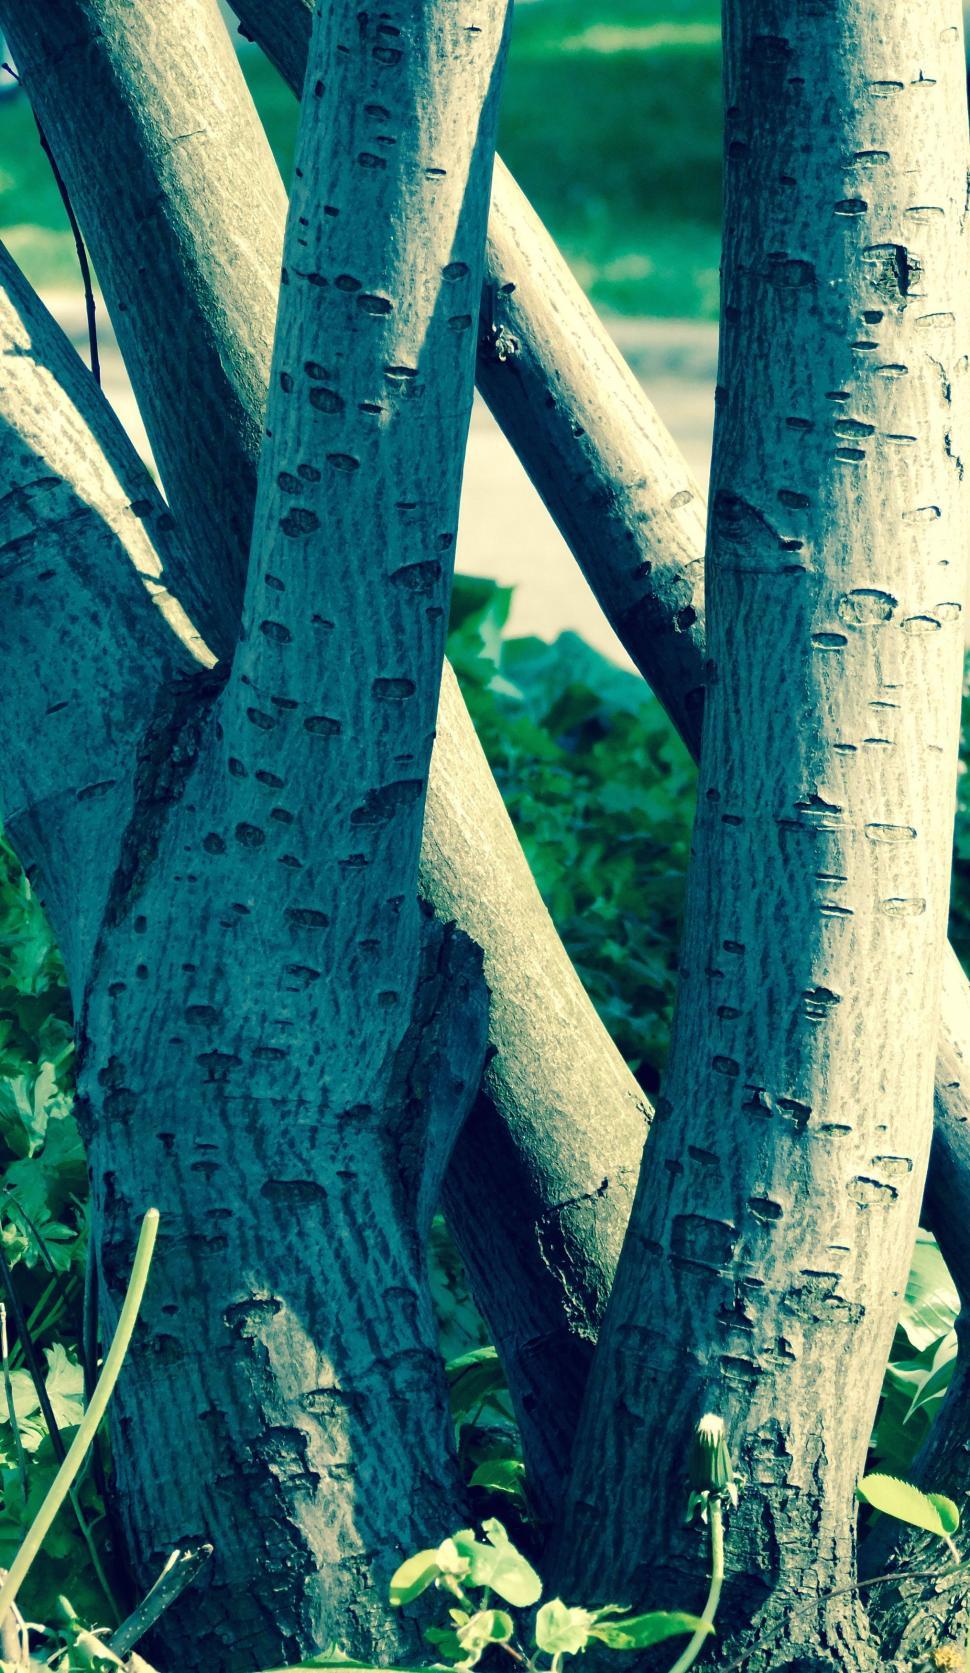 Free Image of Tree Trunks  